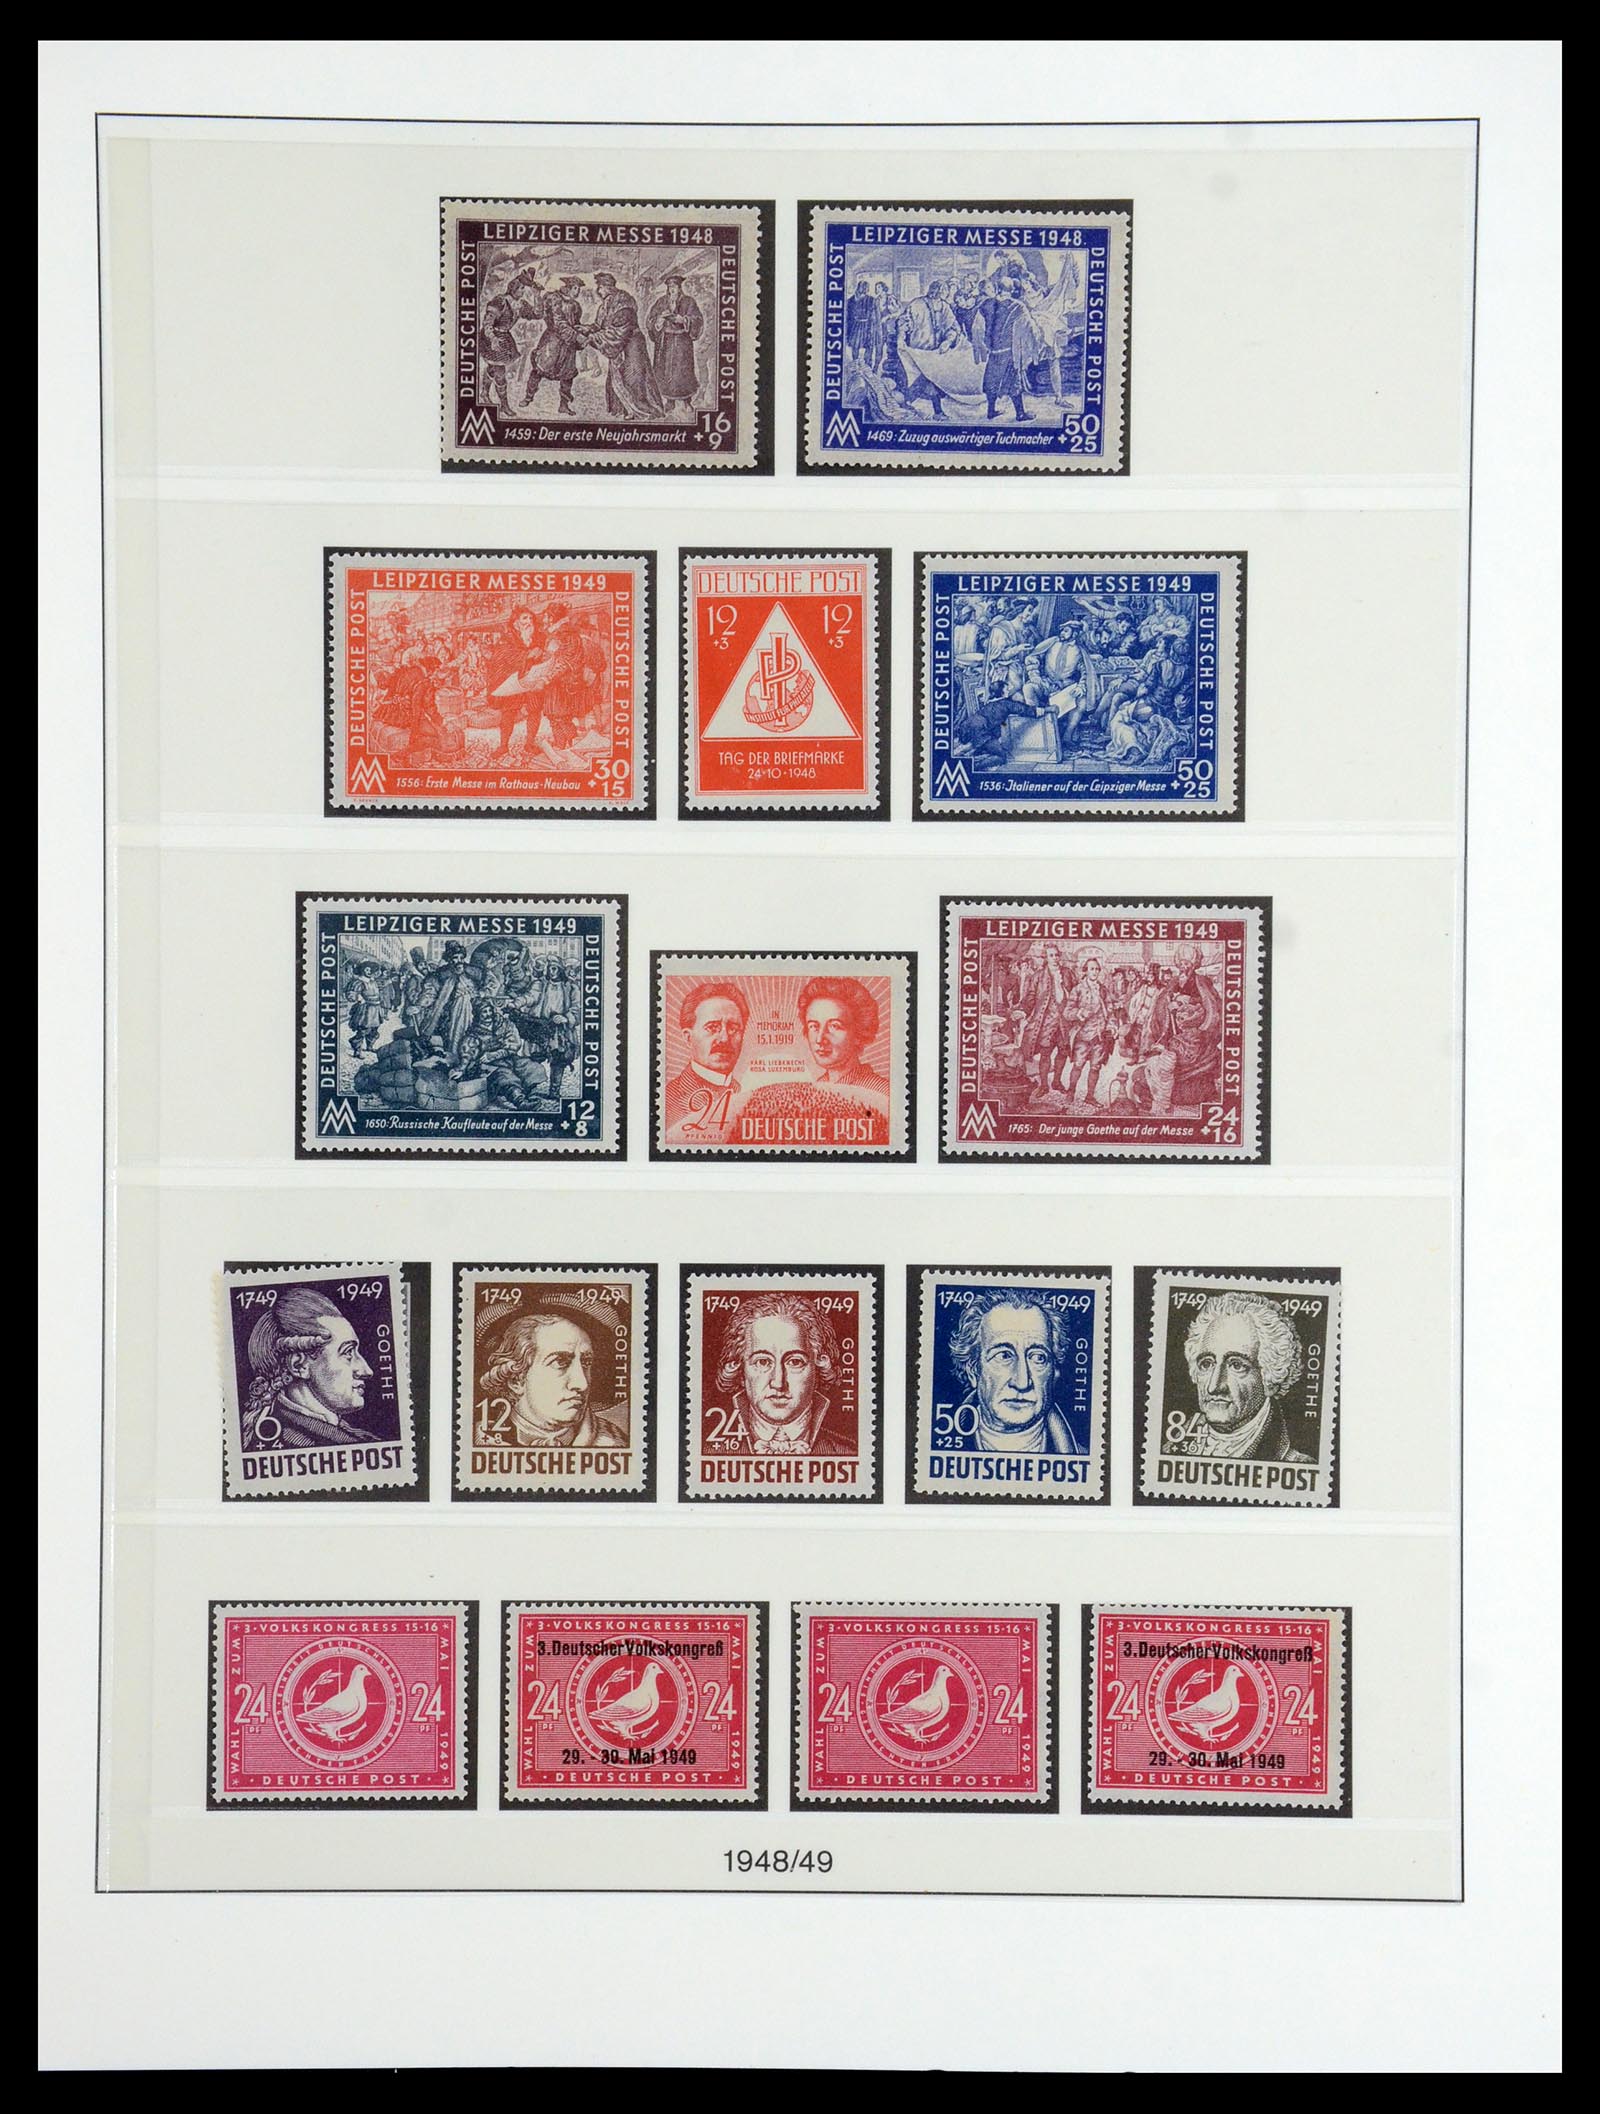 36361 036 - Stamp collection 36361 Soviet Zone 1945-1949.